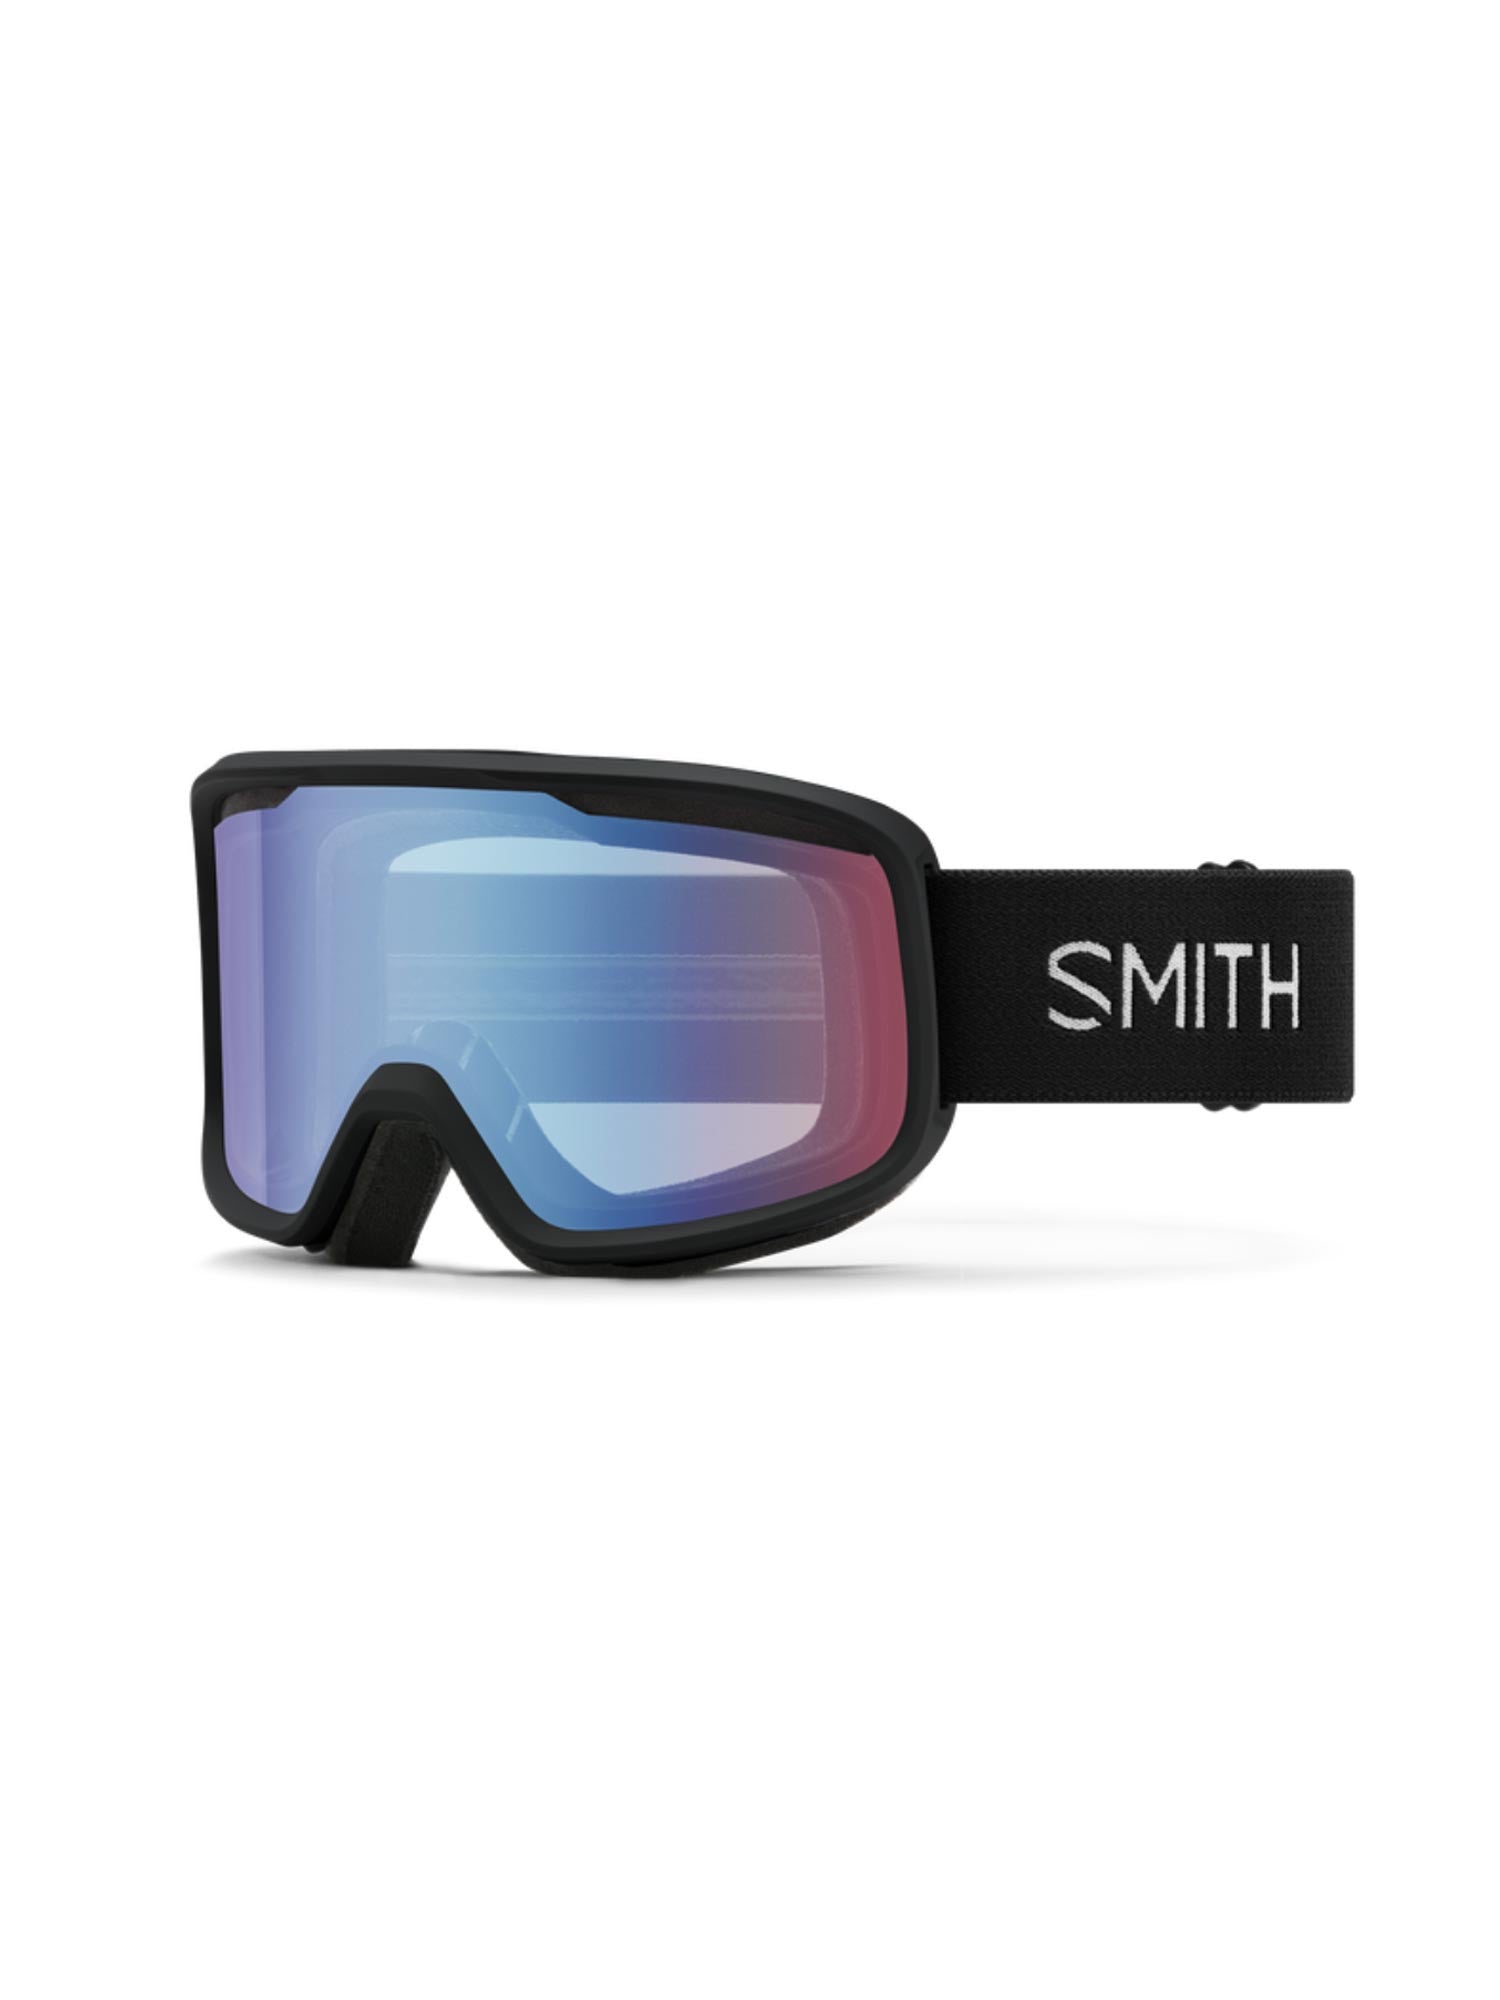 Smith ski/snowboard goggles, black strap blue lens